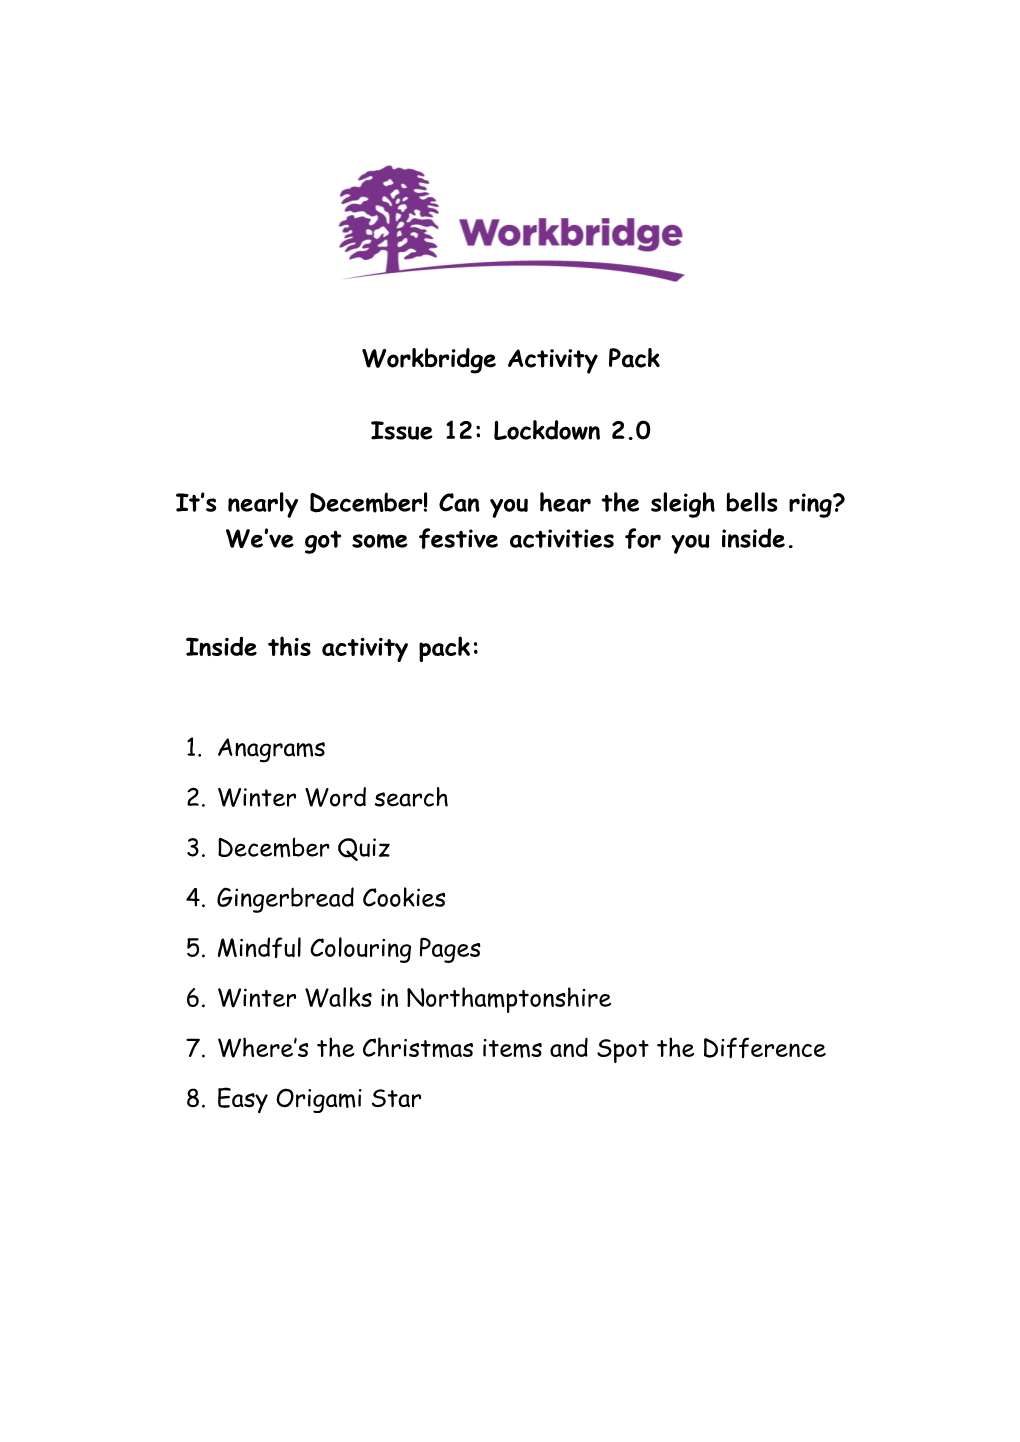 Workbridge Activity Pack Issue 12: Lockdown 2.0 It's Nearly December